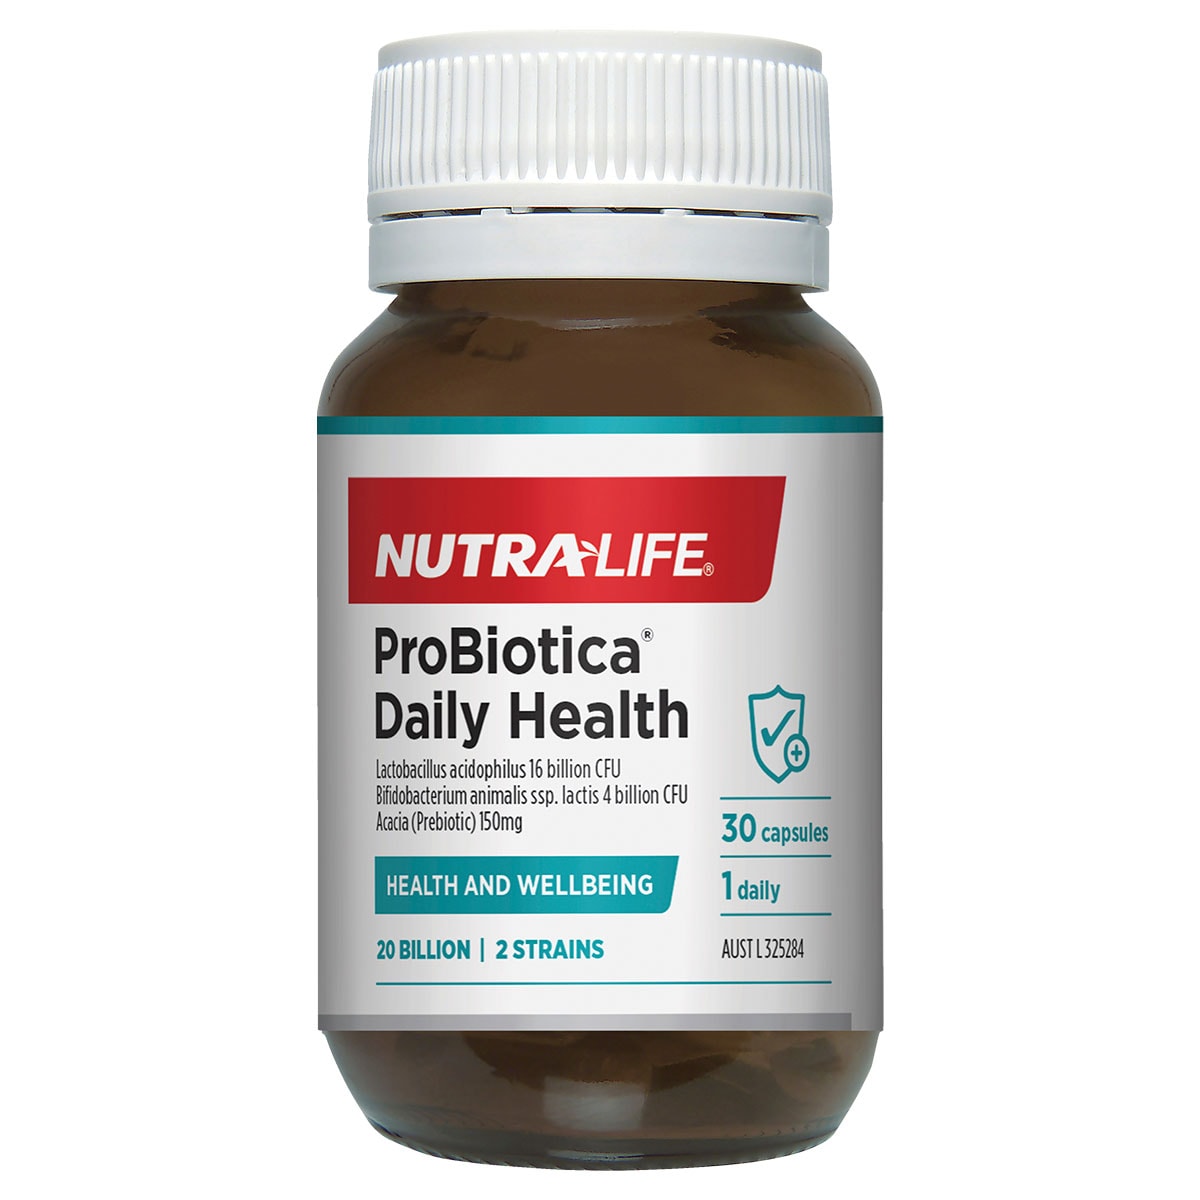 Nutra-Life ProBiotica Daily Health 30 Capsules Australia